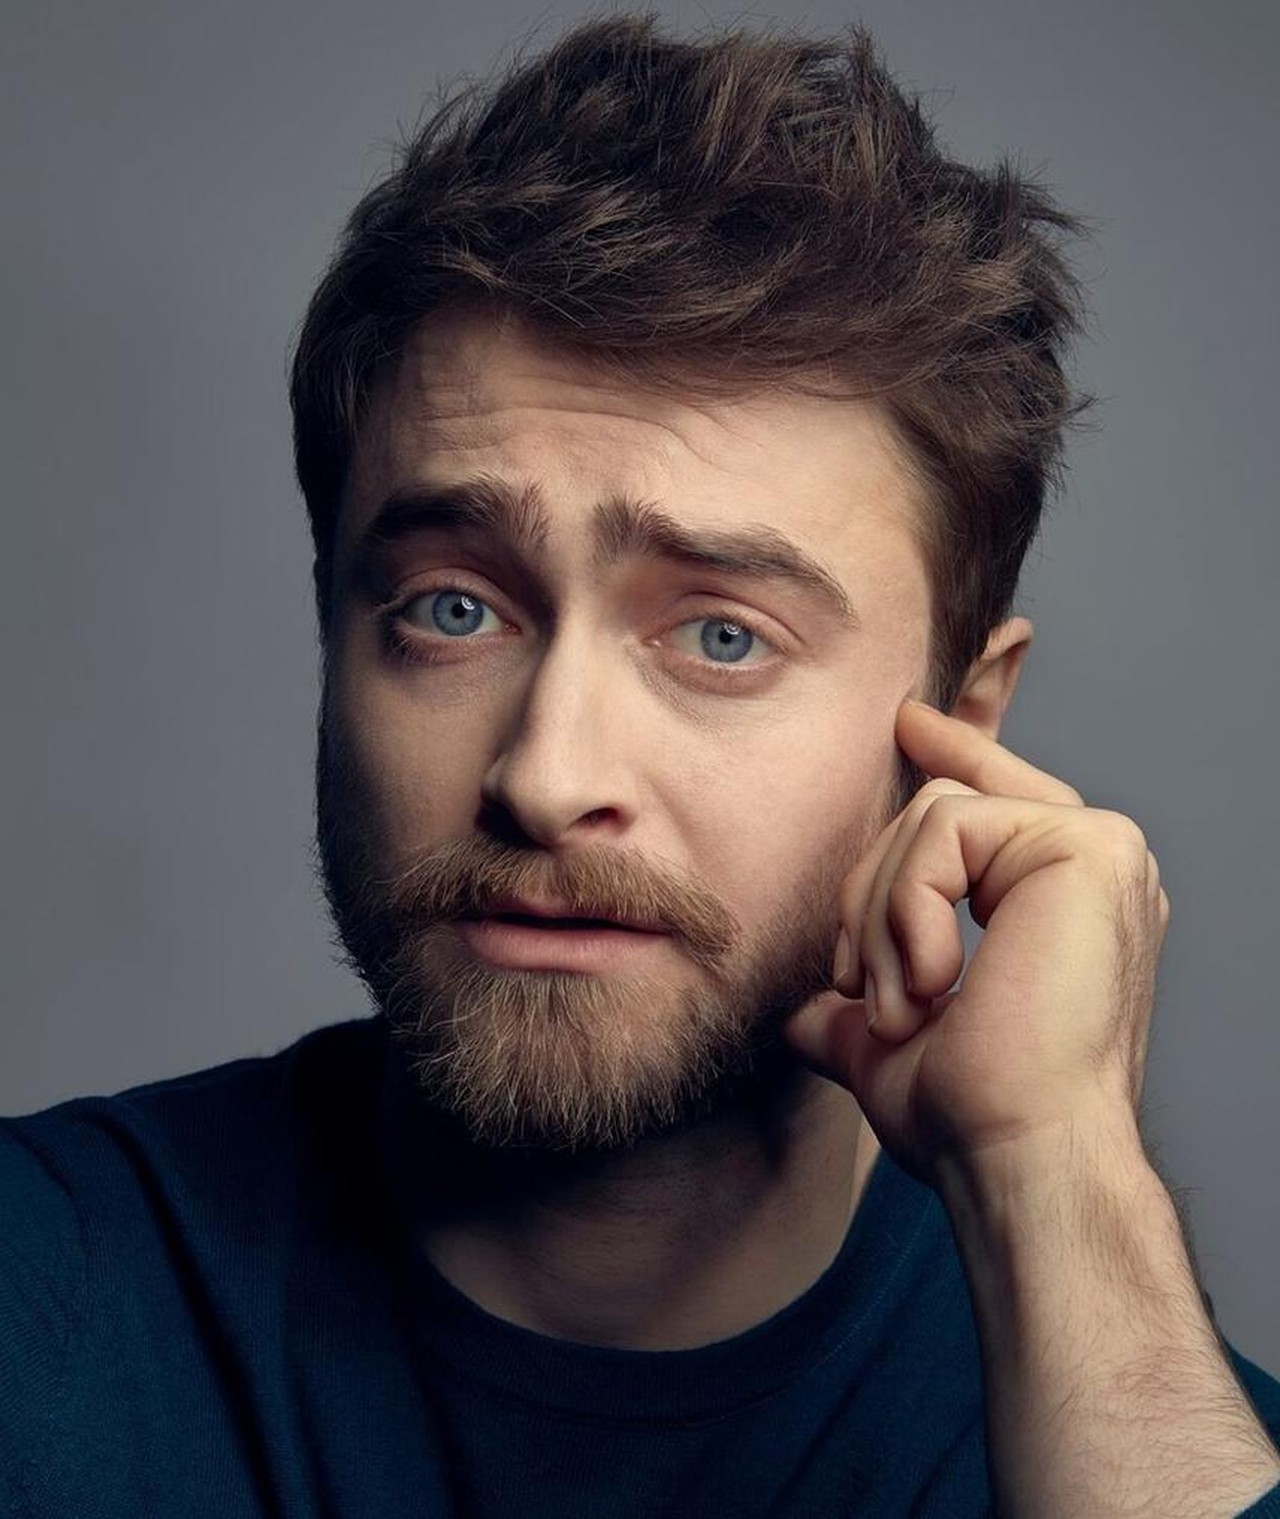 Daniel Radcliffe Movies List 2022